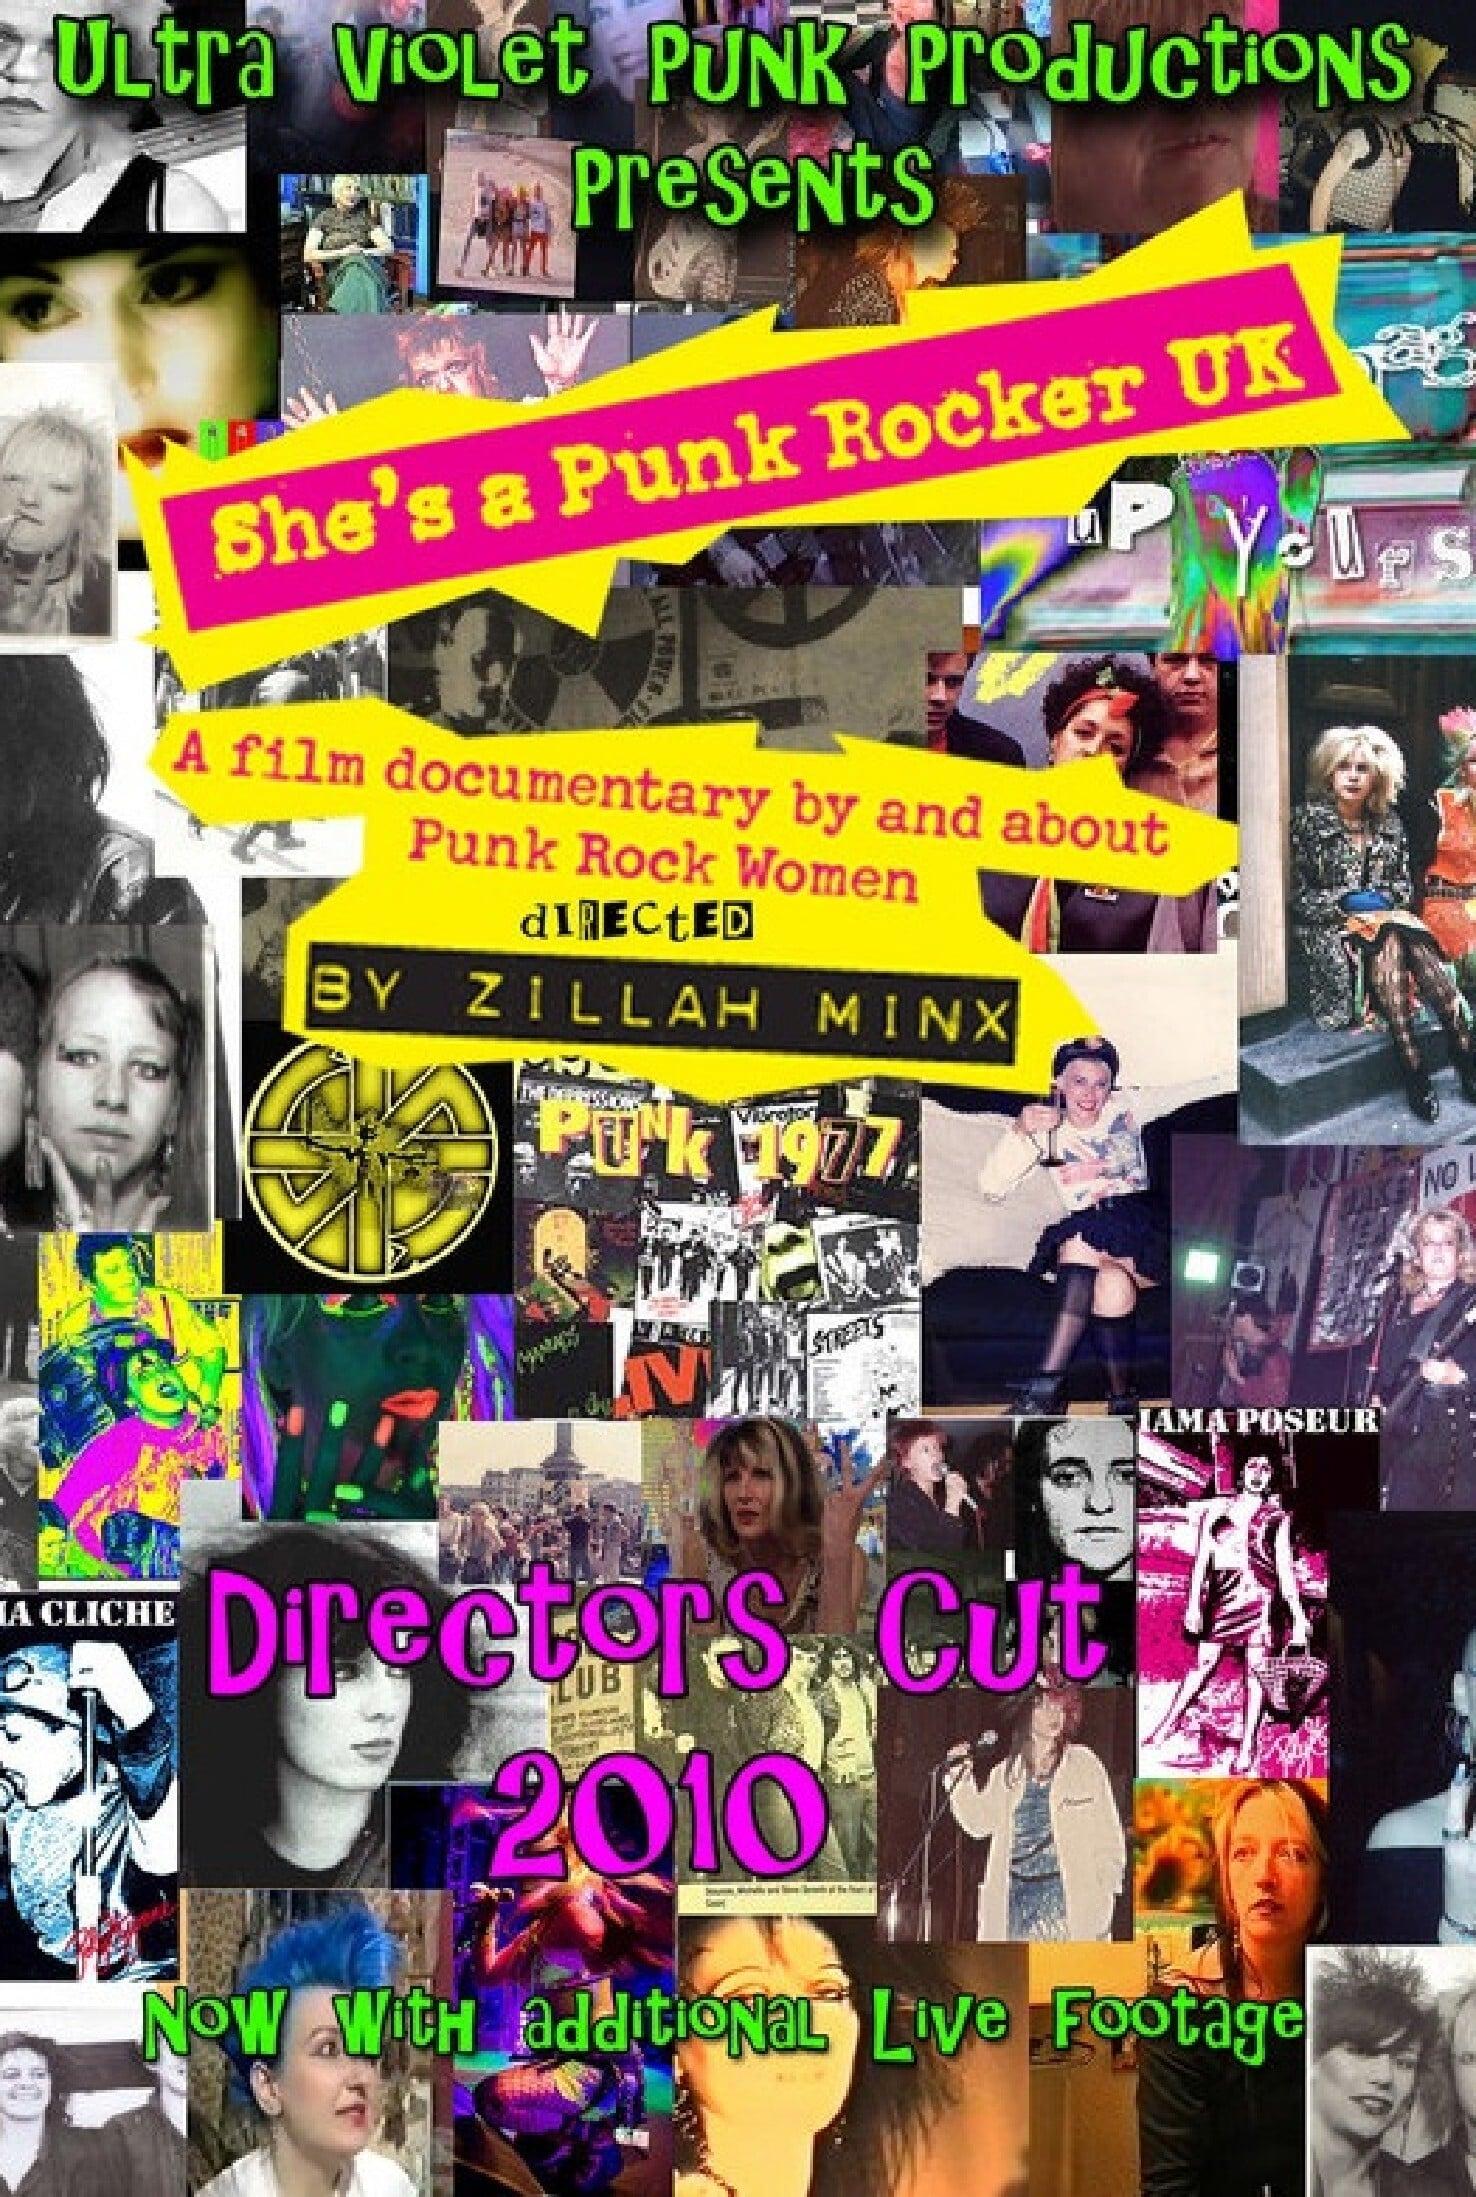 She's a Punk Rocker UK poster